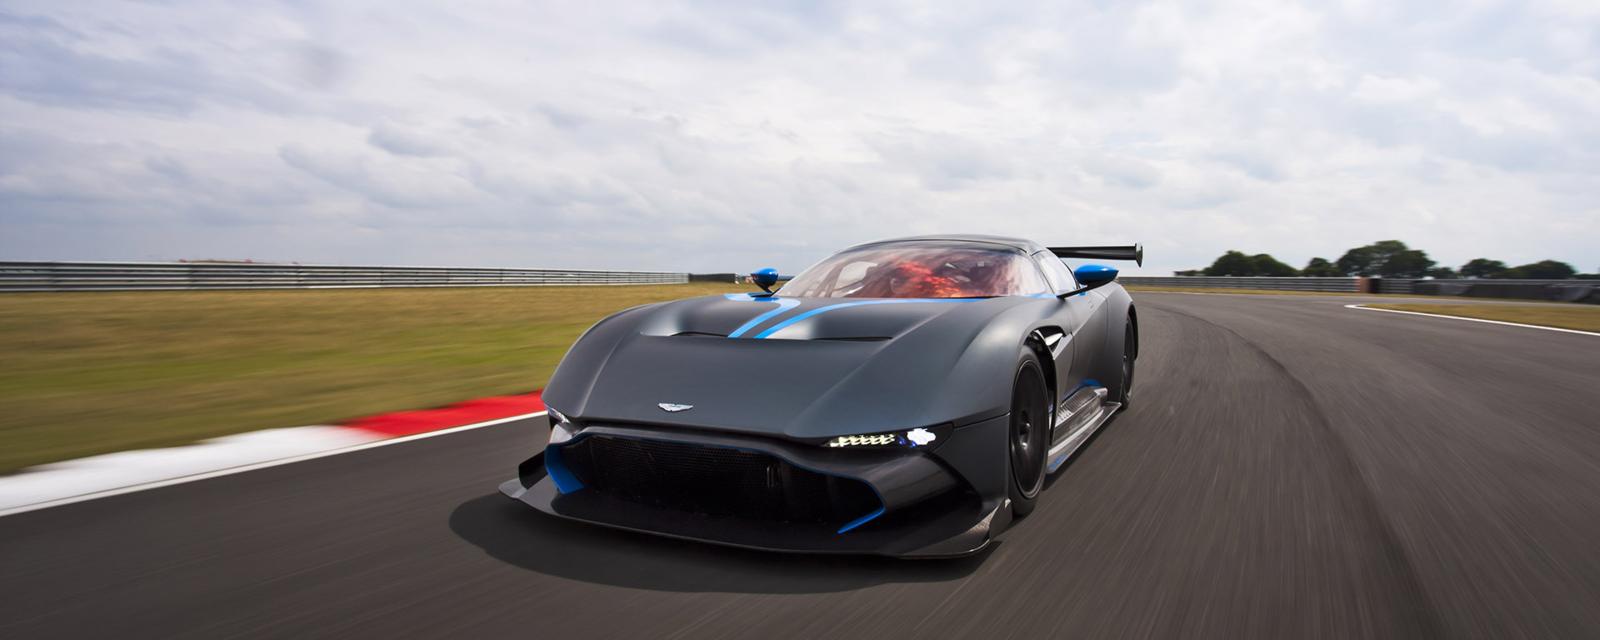 Aston Martin's £1.8m Vulcan